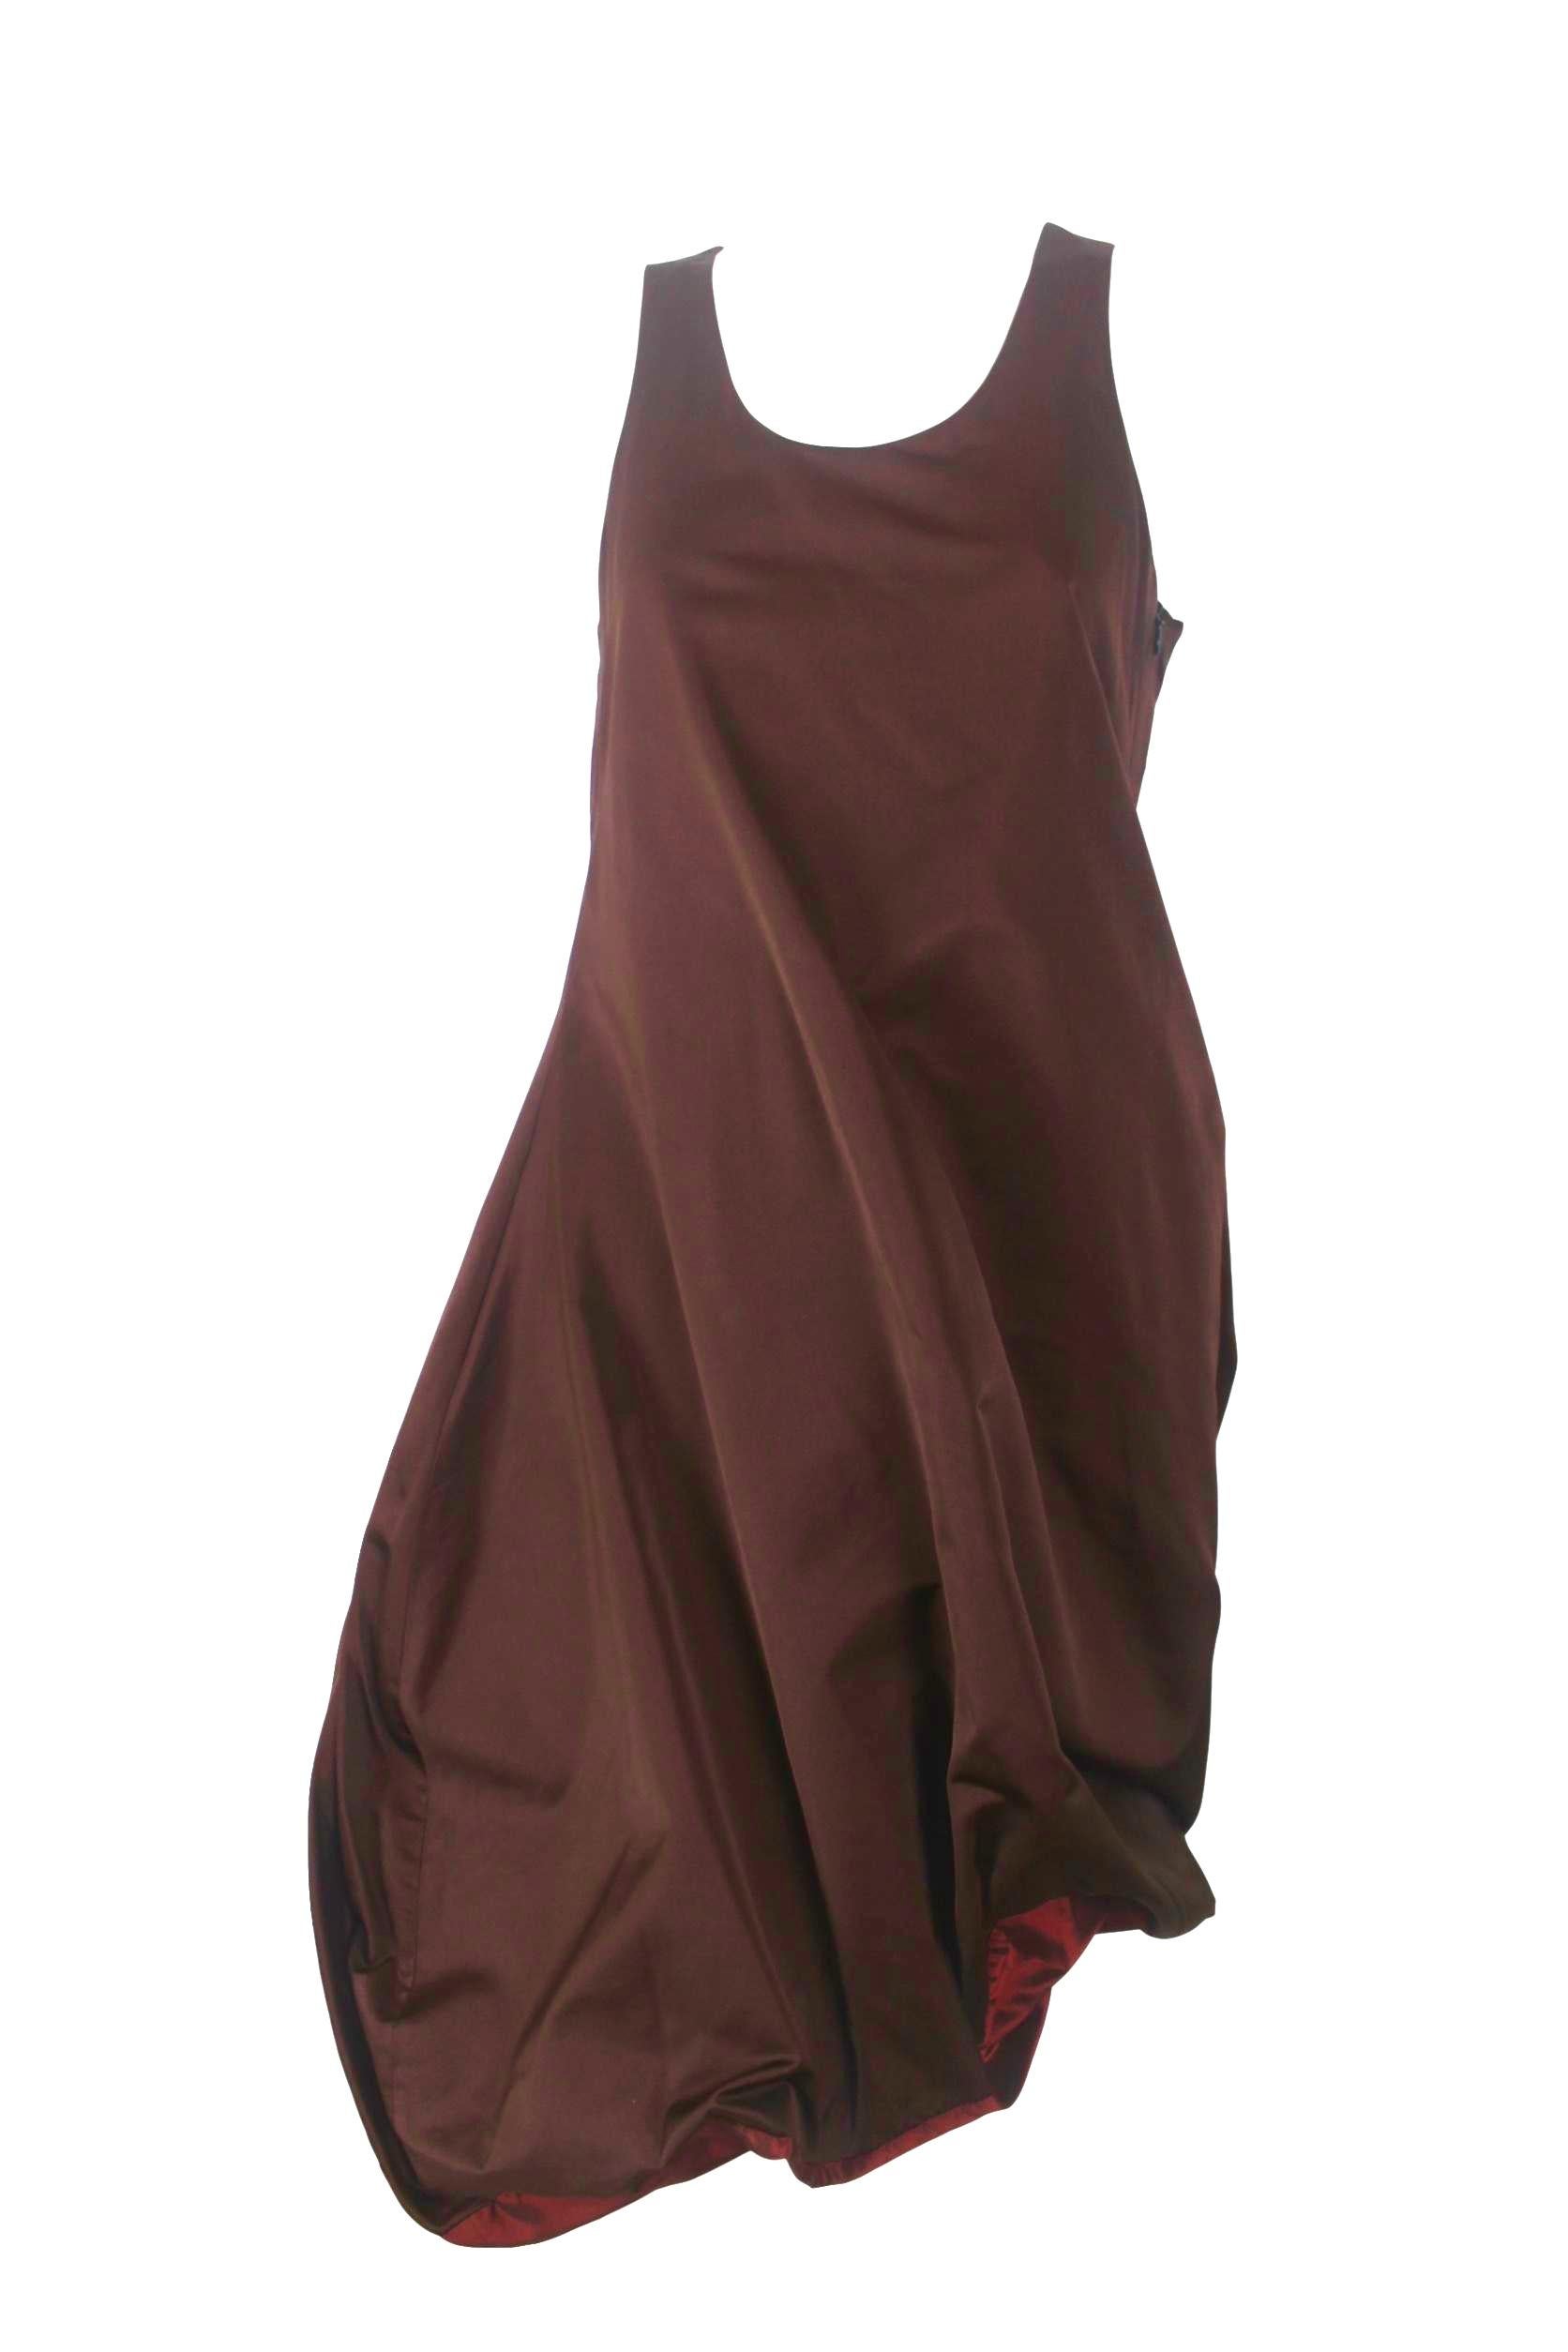 bronze satin dress